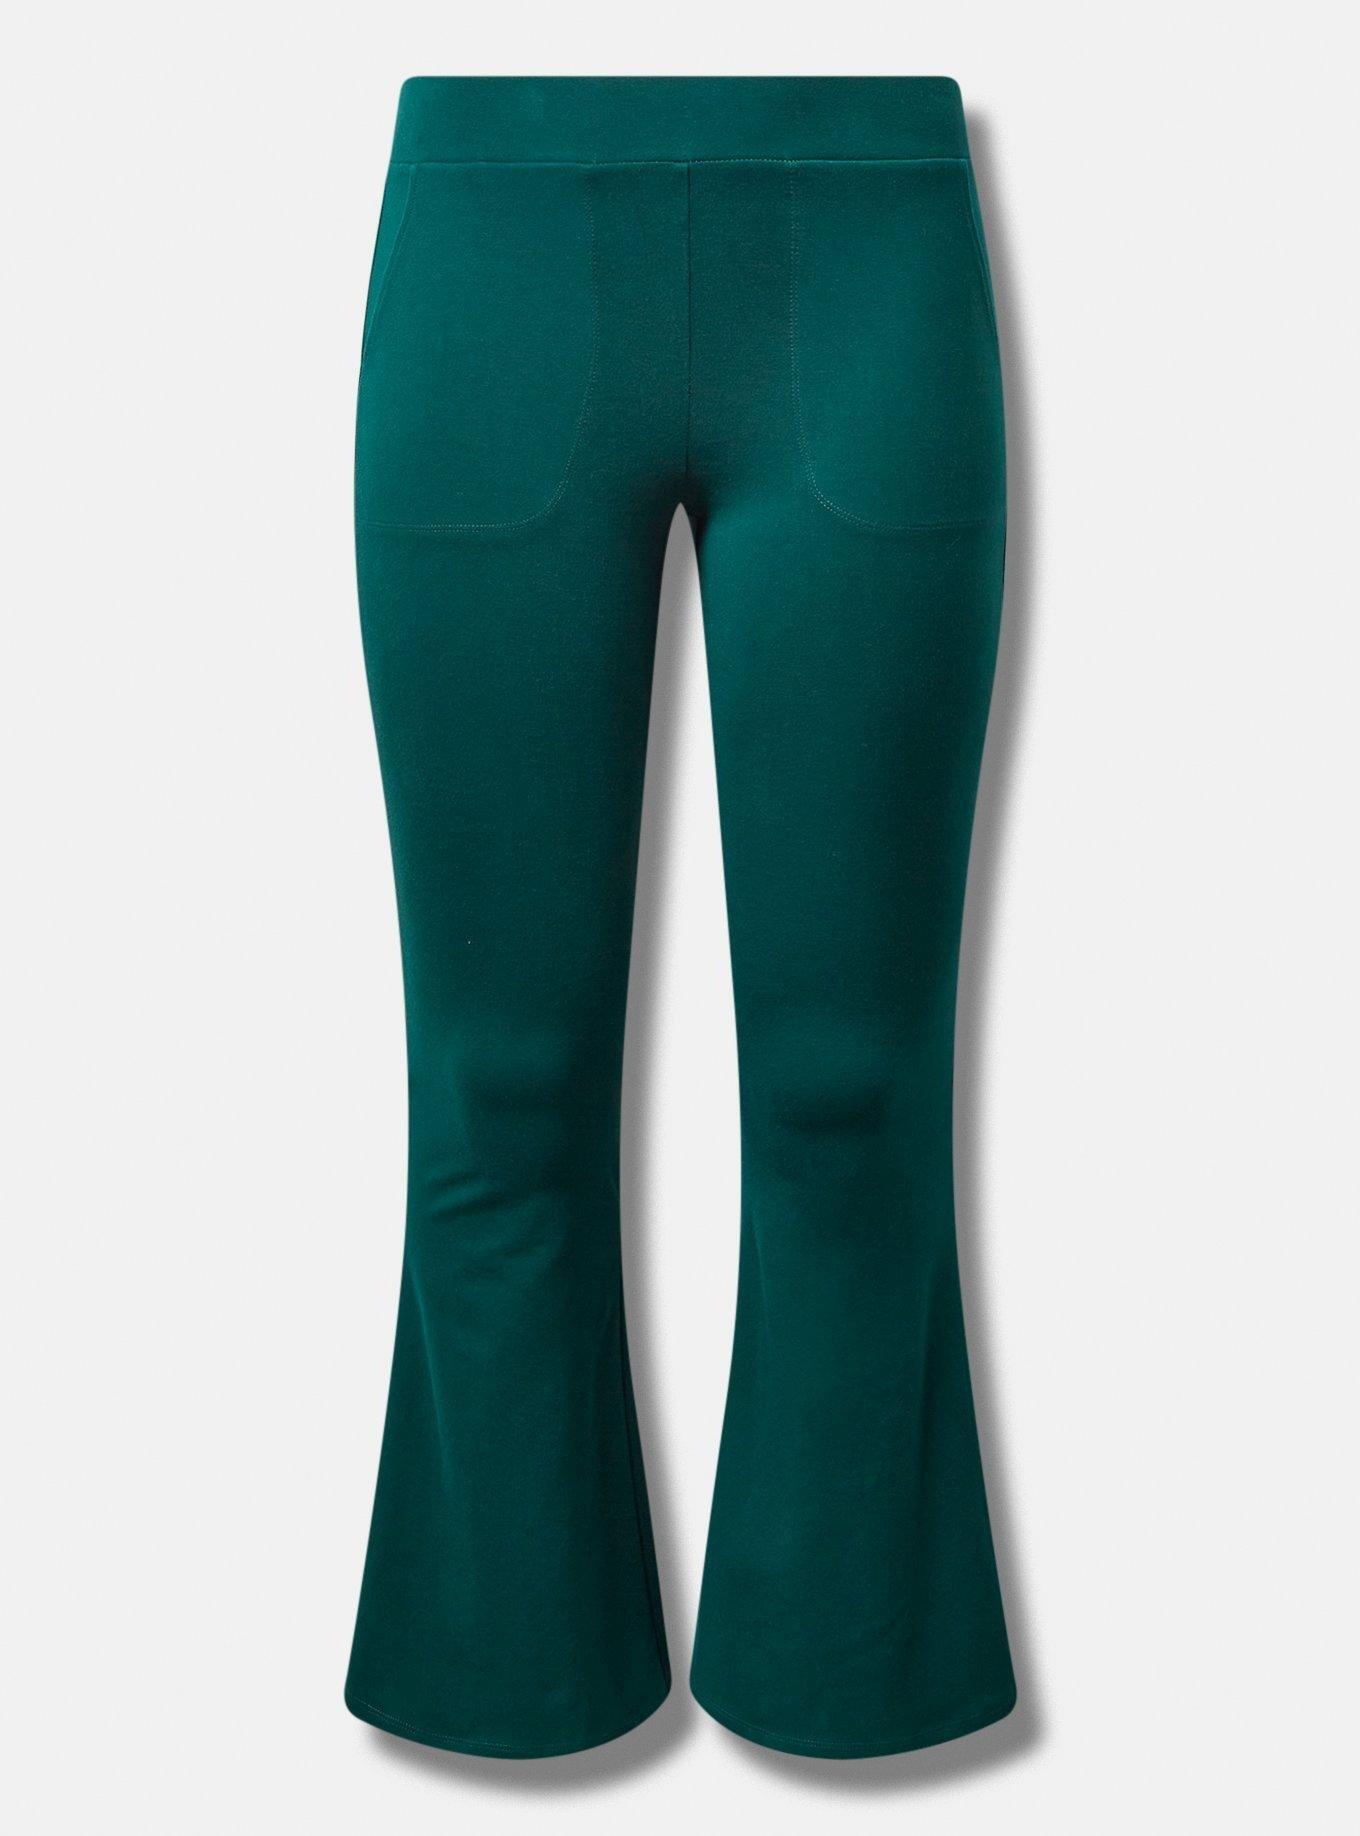 Vero Moda Flared Women Green Trousers